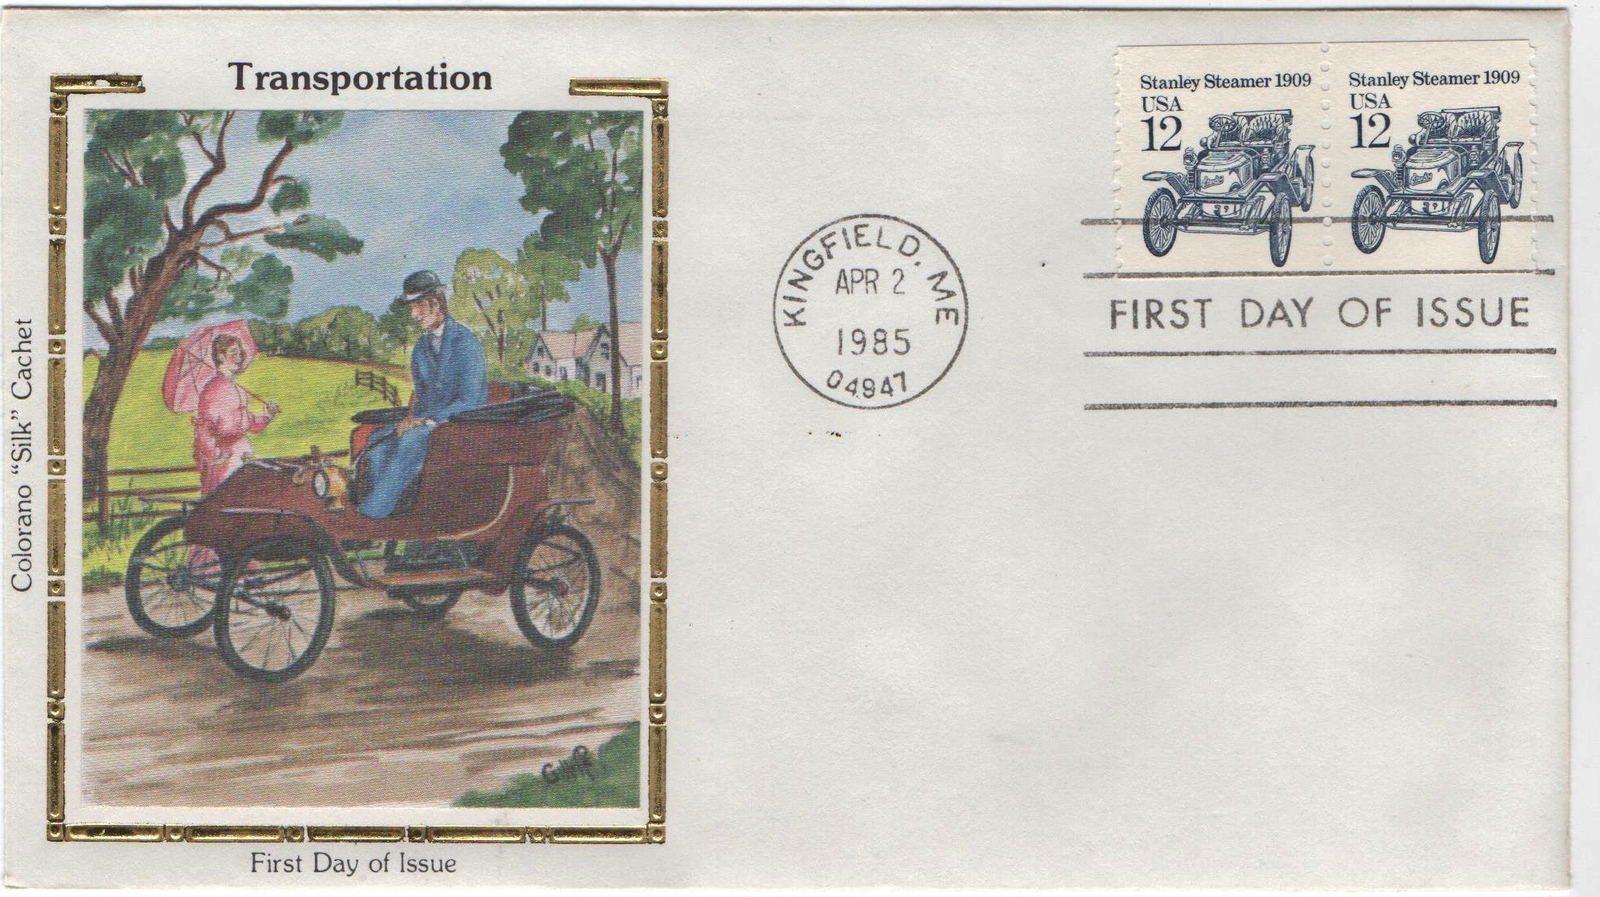 04/02/1985 FDI, 2 1909 Stanley Steamer 12c Stamps Kingfield, ME - $2.00